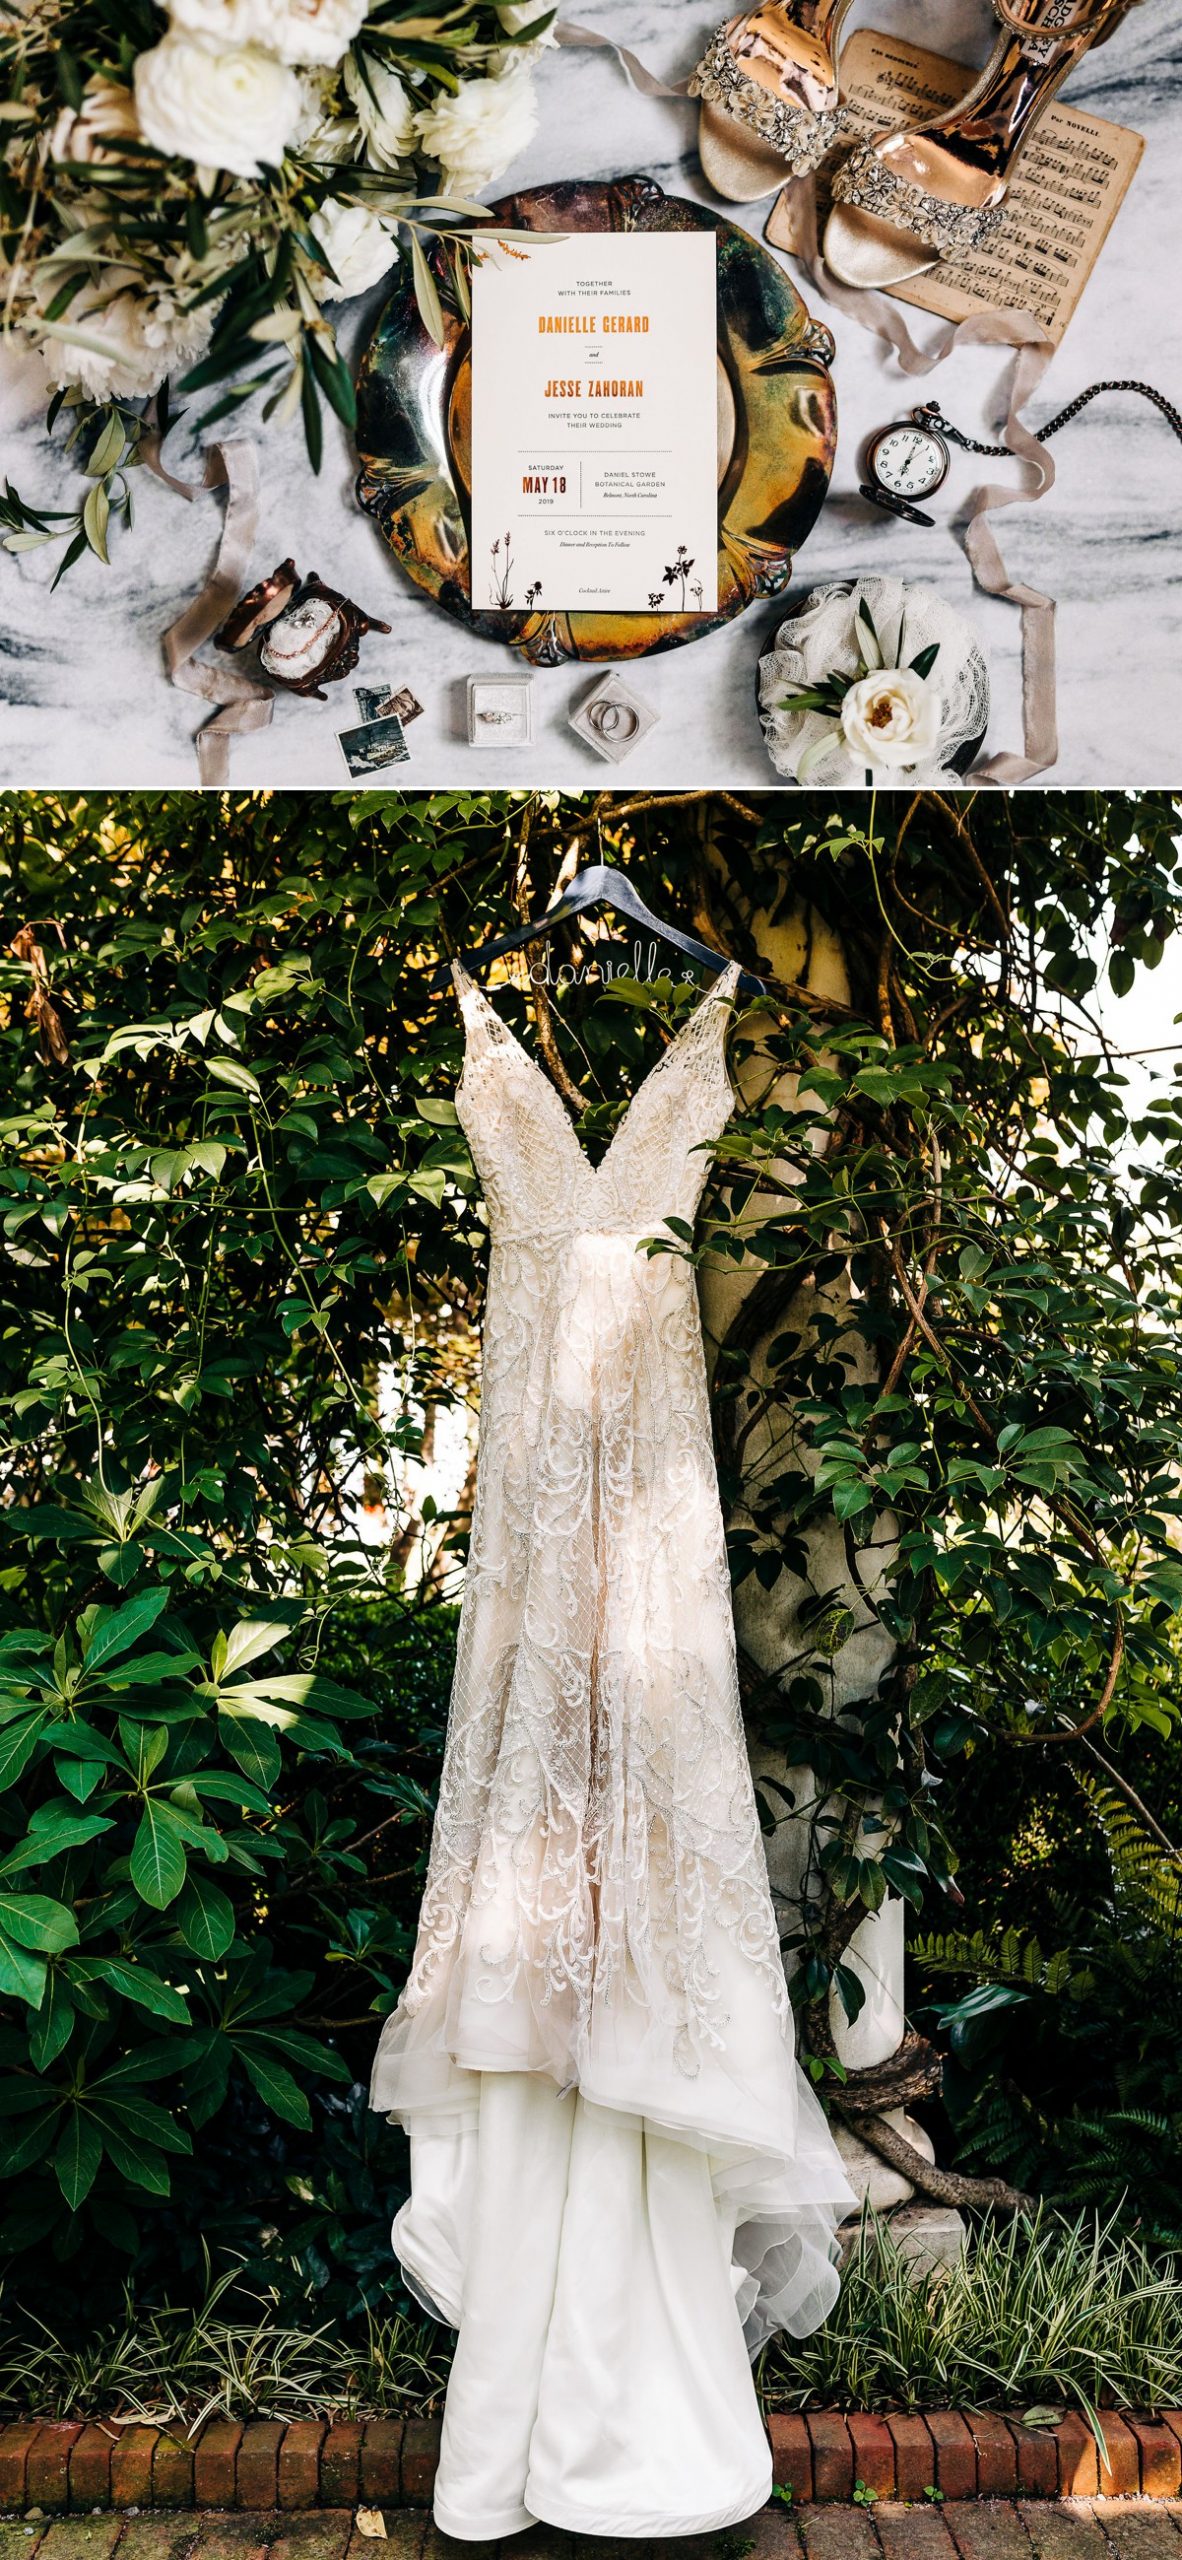 Rebecca Stone Photography, Invitation Flatlay, Wedding Dress, Kleinfeld, Enaura Wedding Dress, Daniel Stowe Botanical Garden